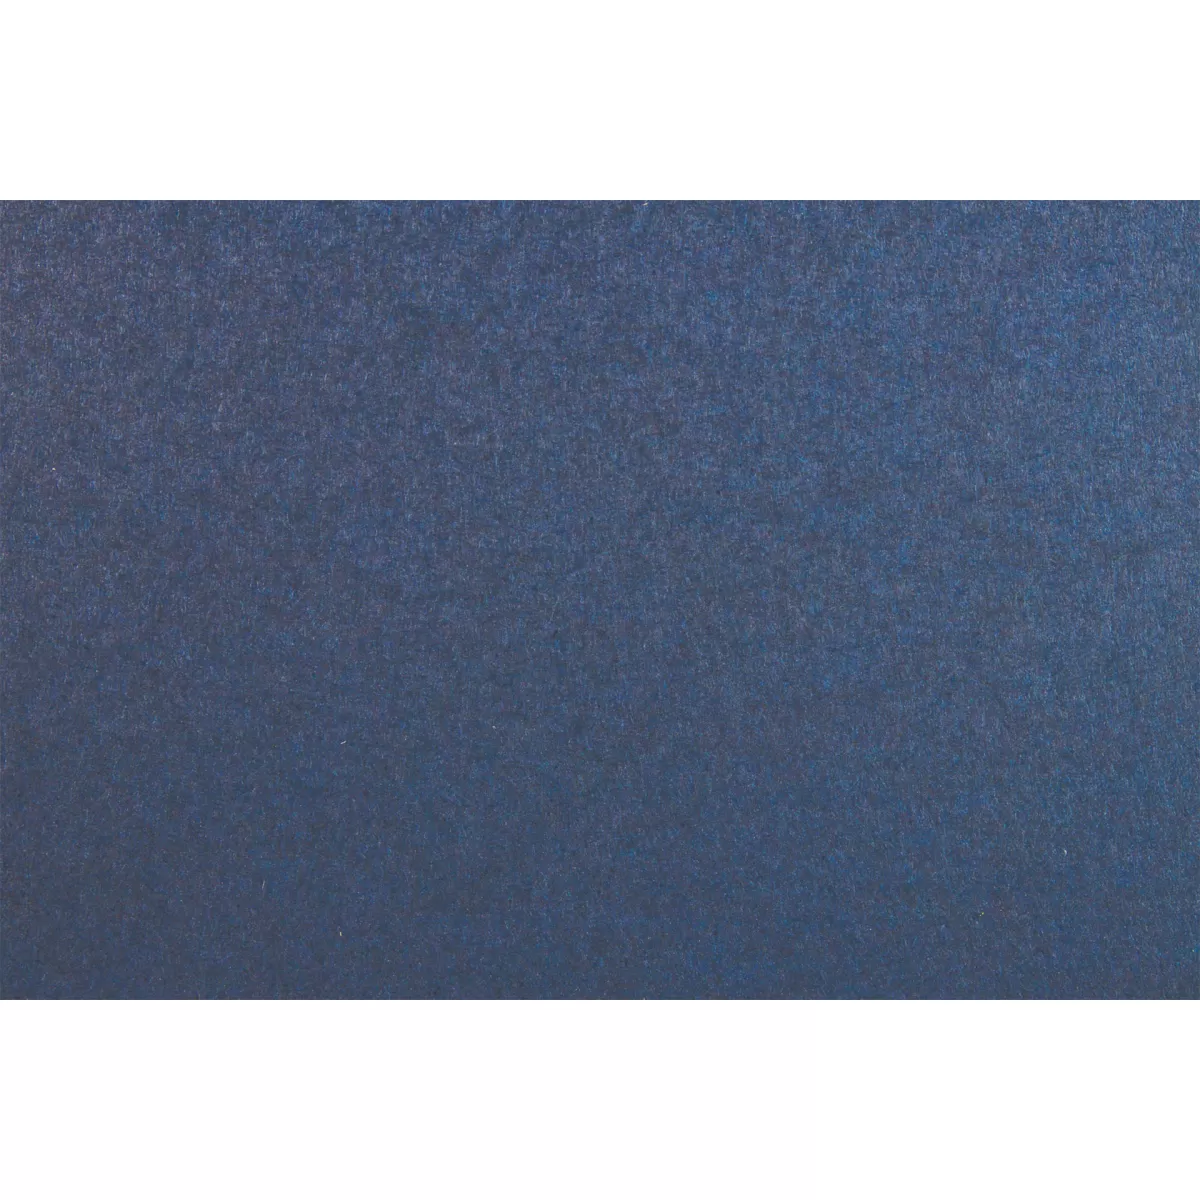 Fabriano Картон Colore, 50 x 70 cm, 200 g/m2, № 250, индиго